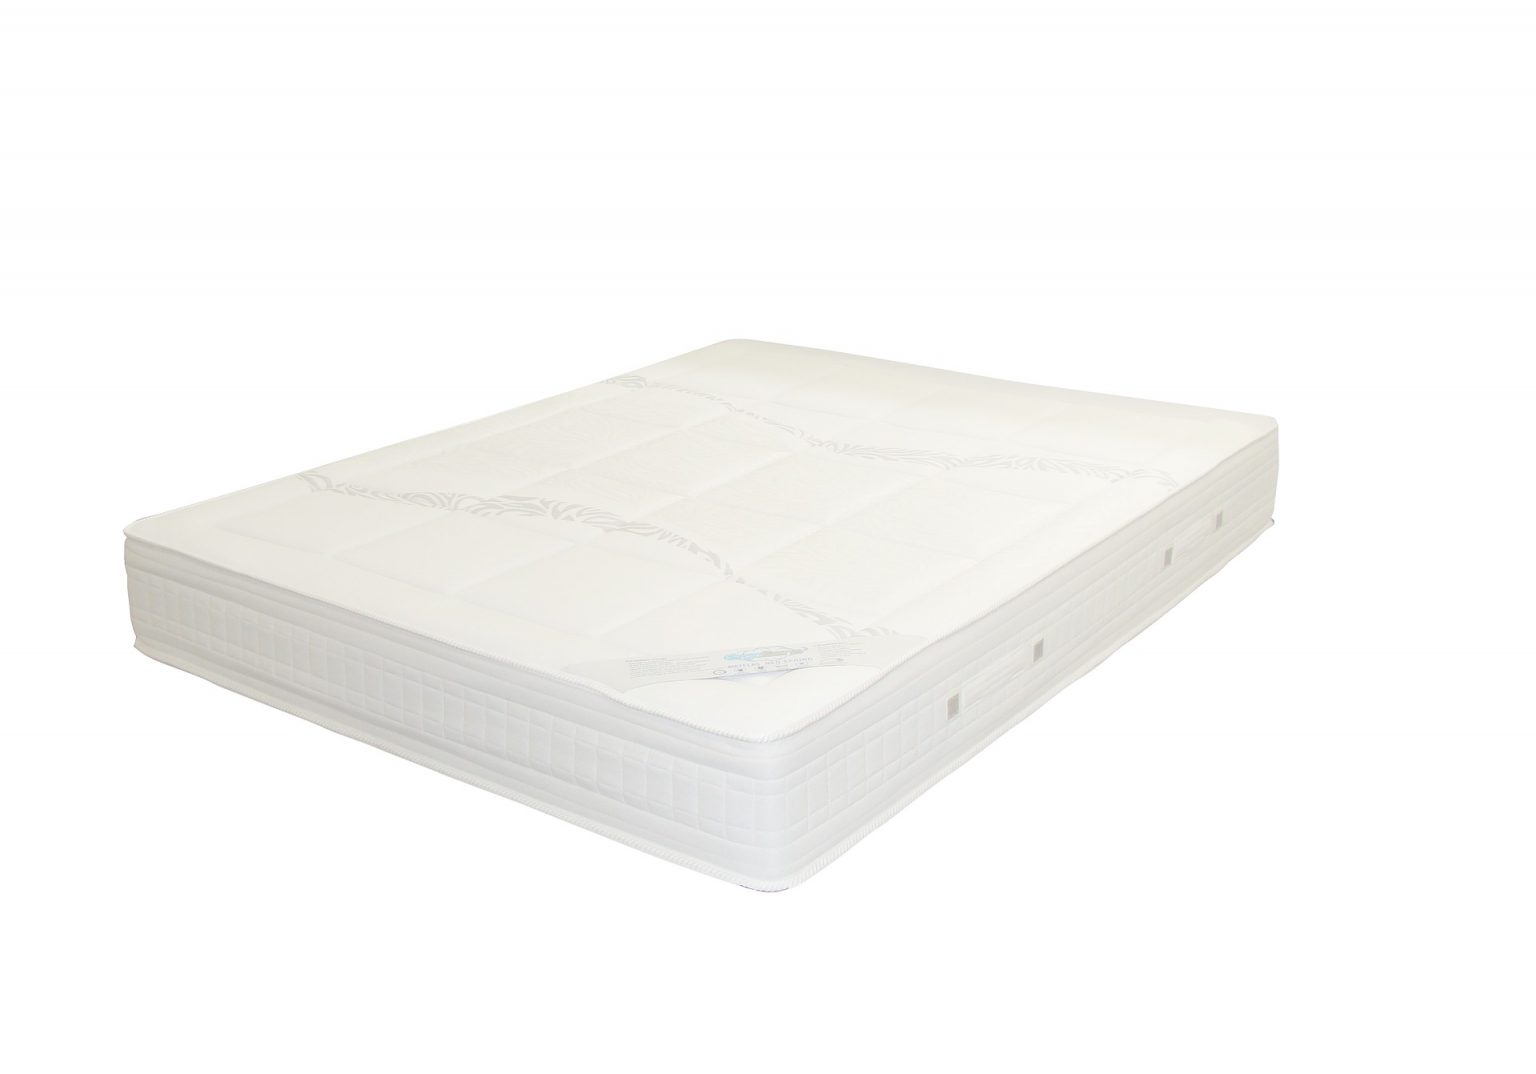 mattress for sale in kenya